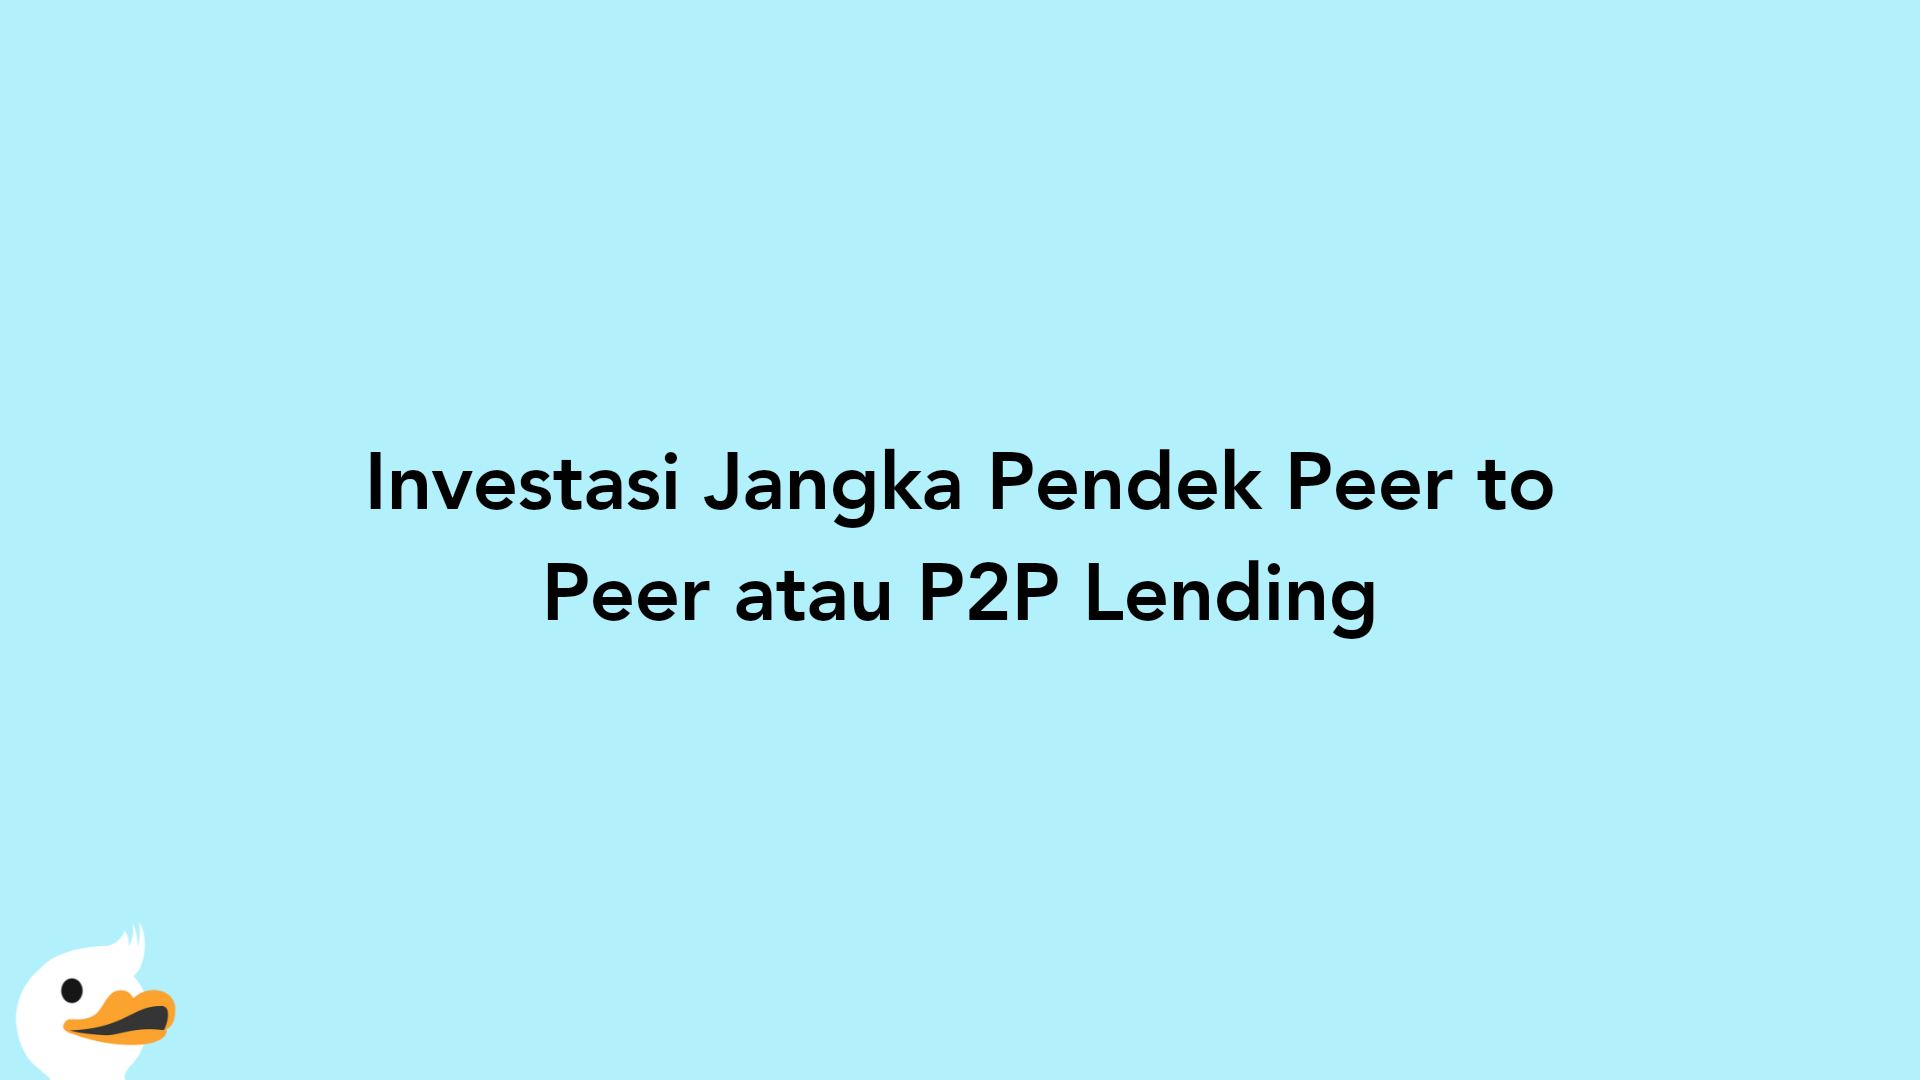 Investasi Jangka Pendek Peer to Peer atau P2P Lending